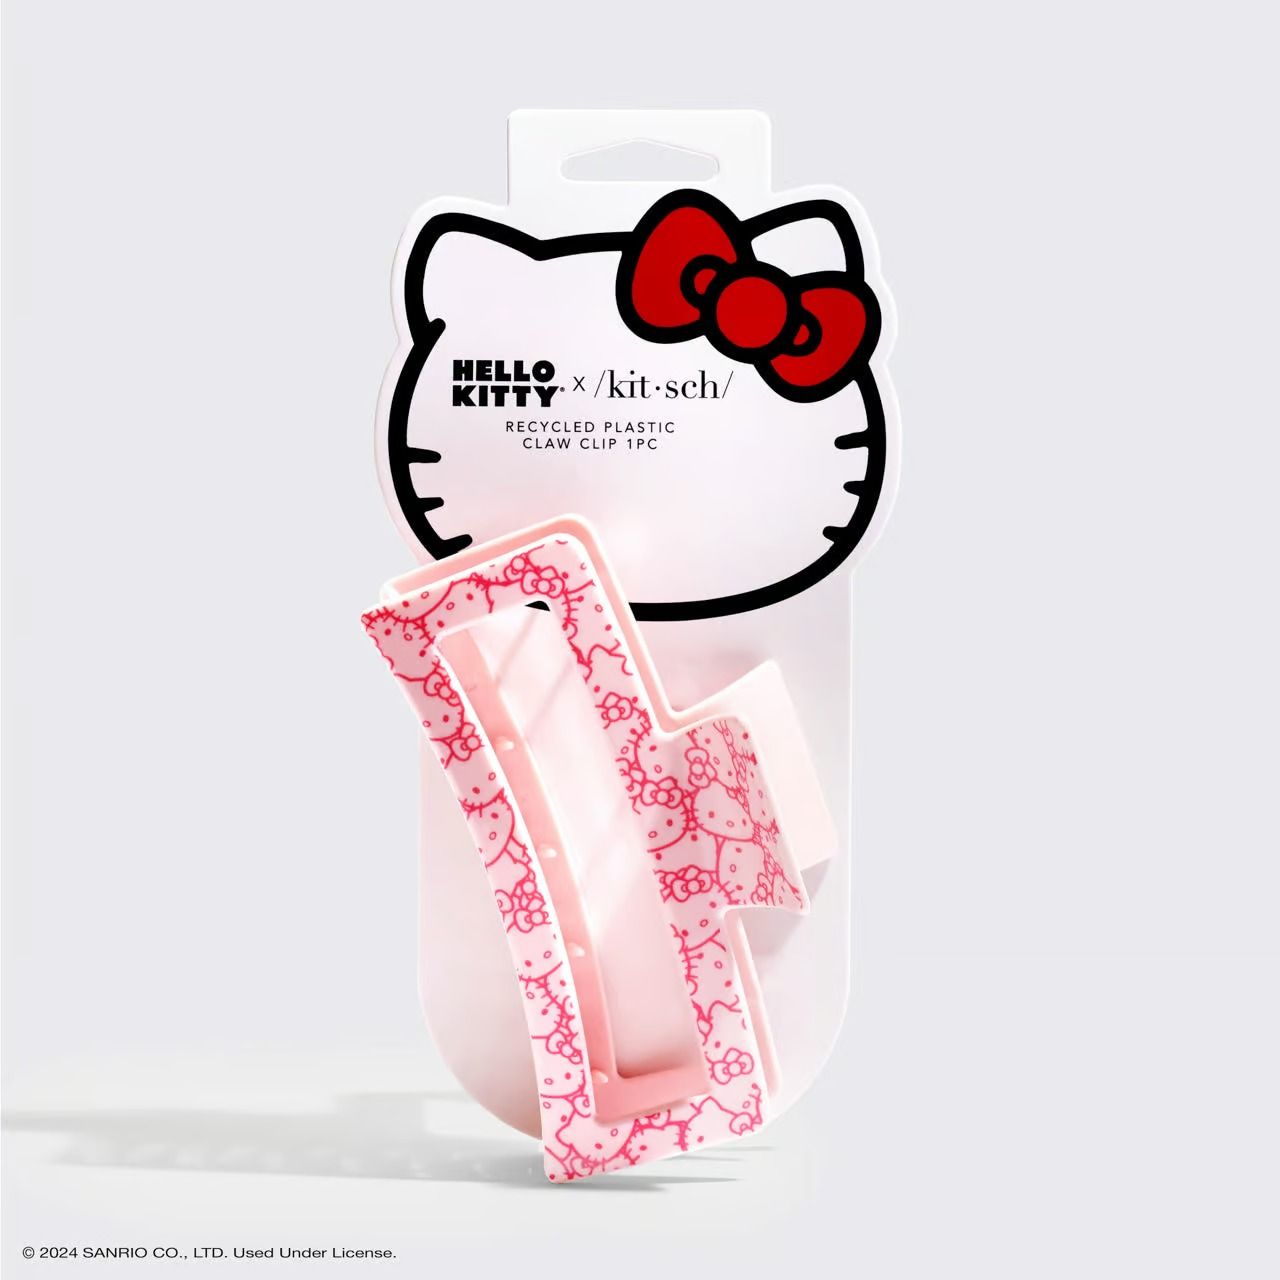 Hello Kitty & Kitsch выпустили официальную коллекцию средств по уходу за собой